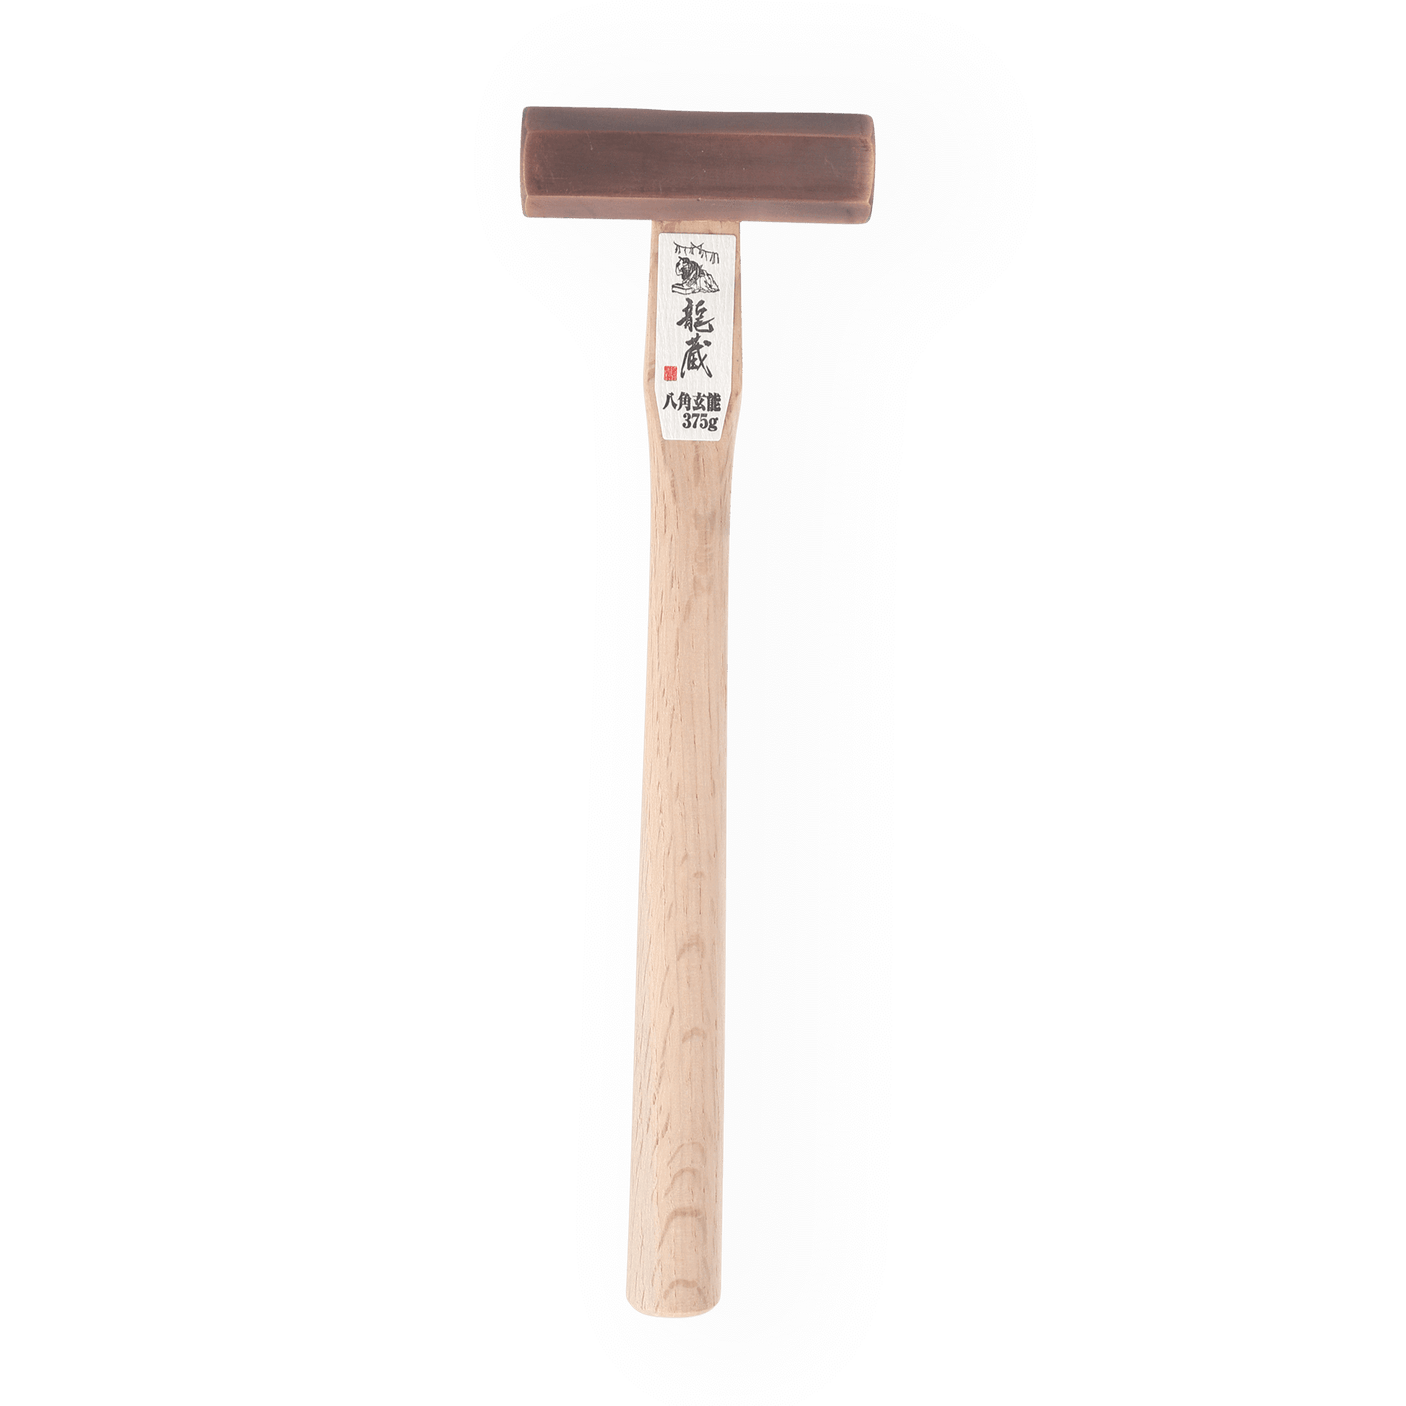 Japanese Bronze-Finish Hammer 375g - Hammers - Japanese Tools Australia